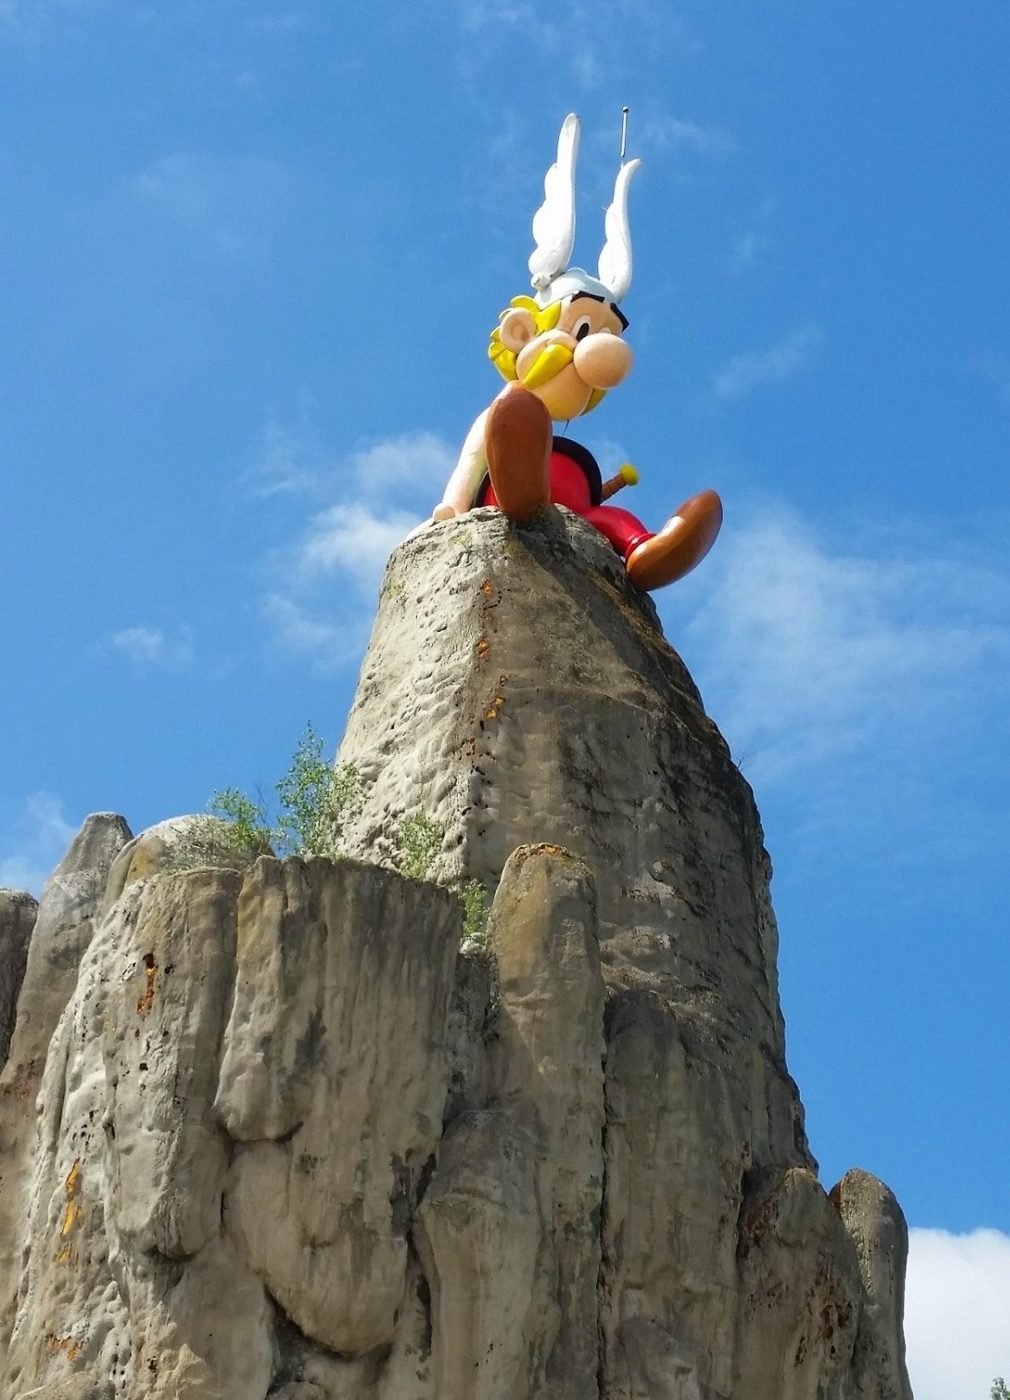 Bate e Volta de Paris Parc Asterix em Paris